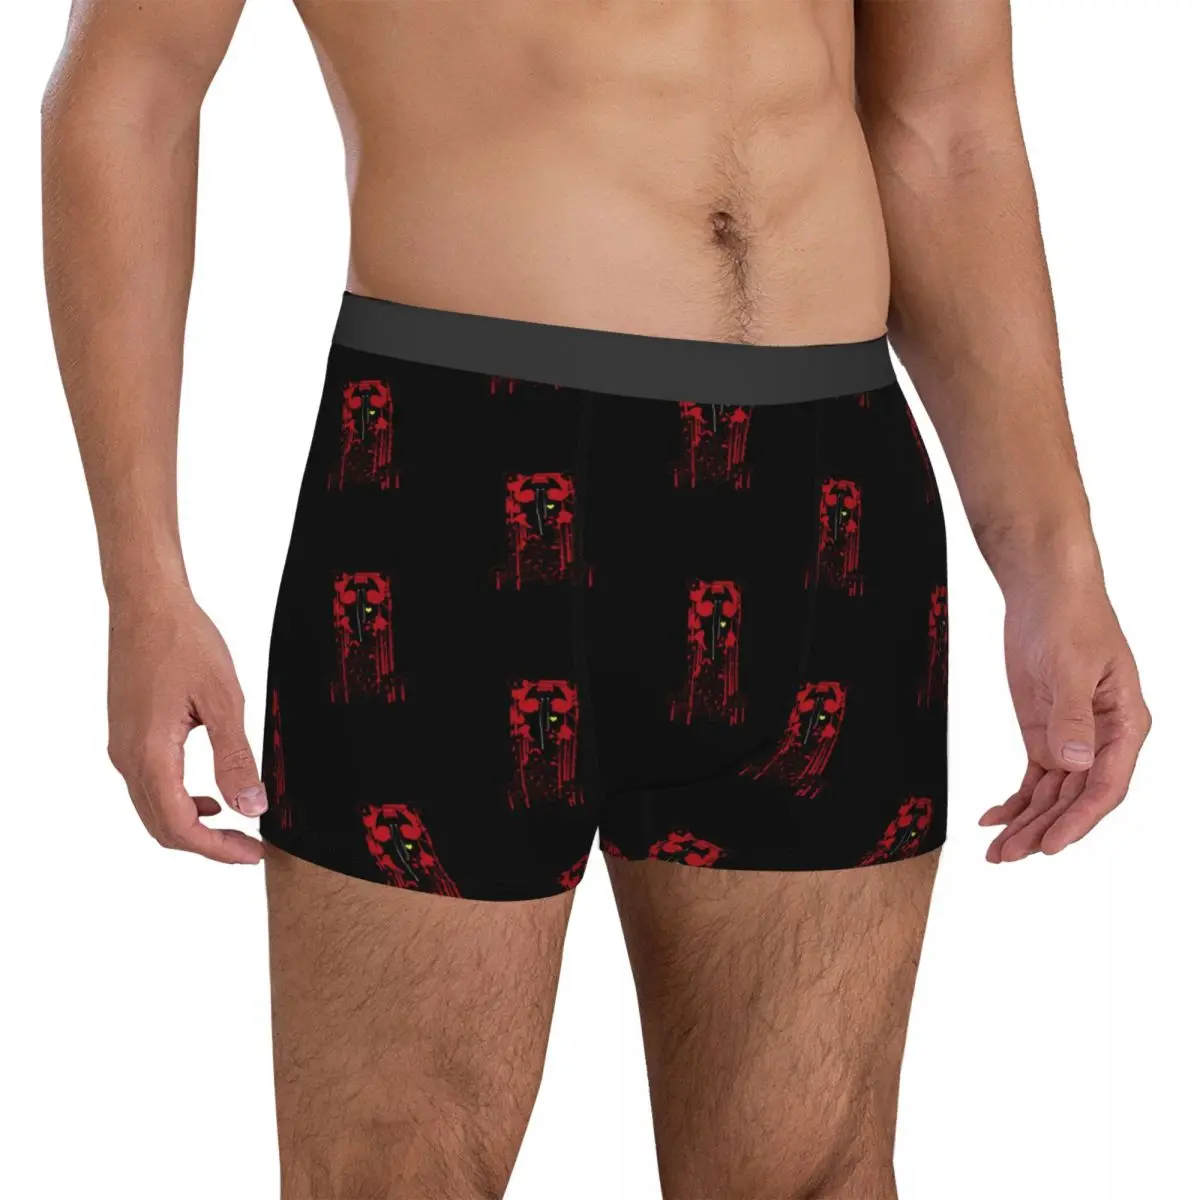 

Devilman Crybaby Anime Underwear manga akira fudo graphic Males Shorts Briefs Breathable Boxershorts Hot Print Underpants Gift